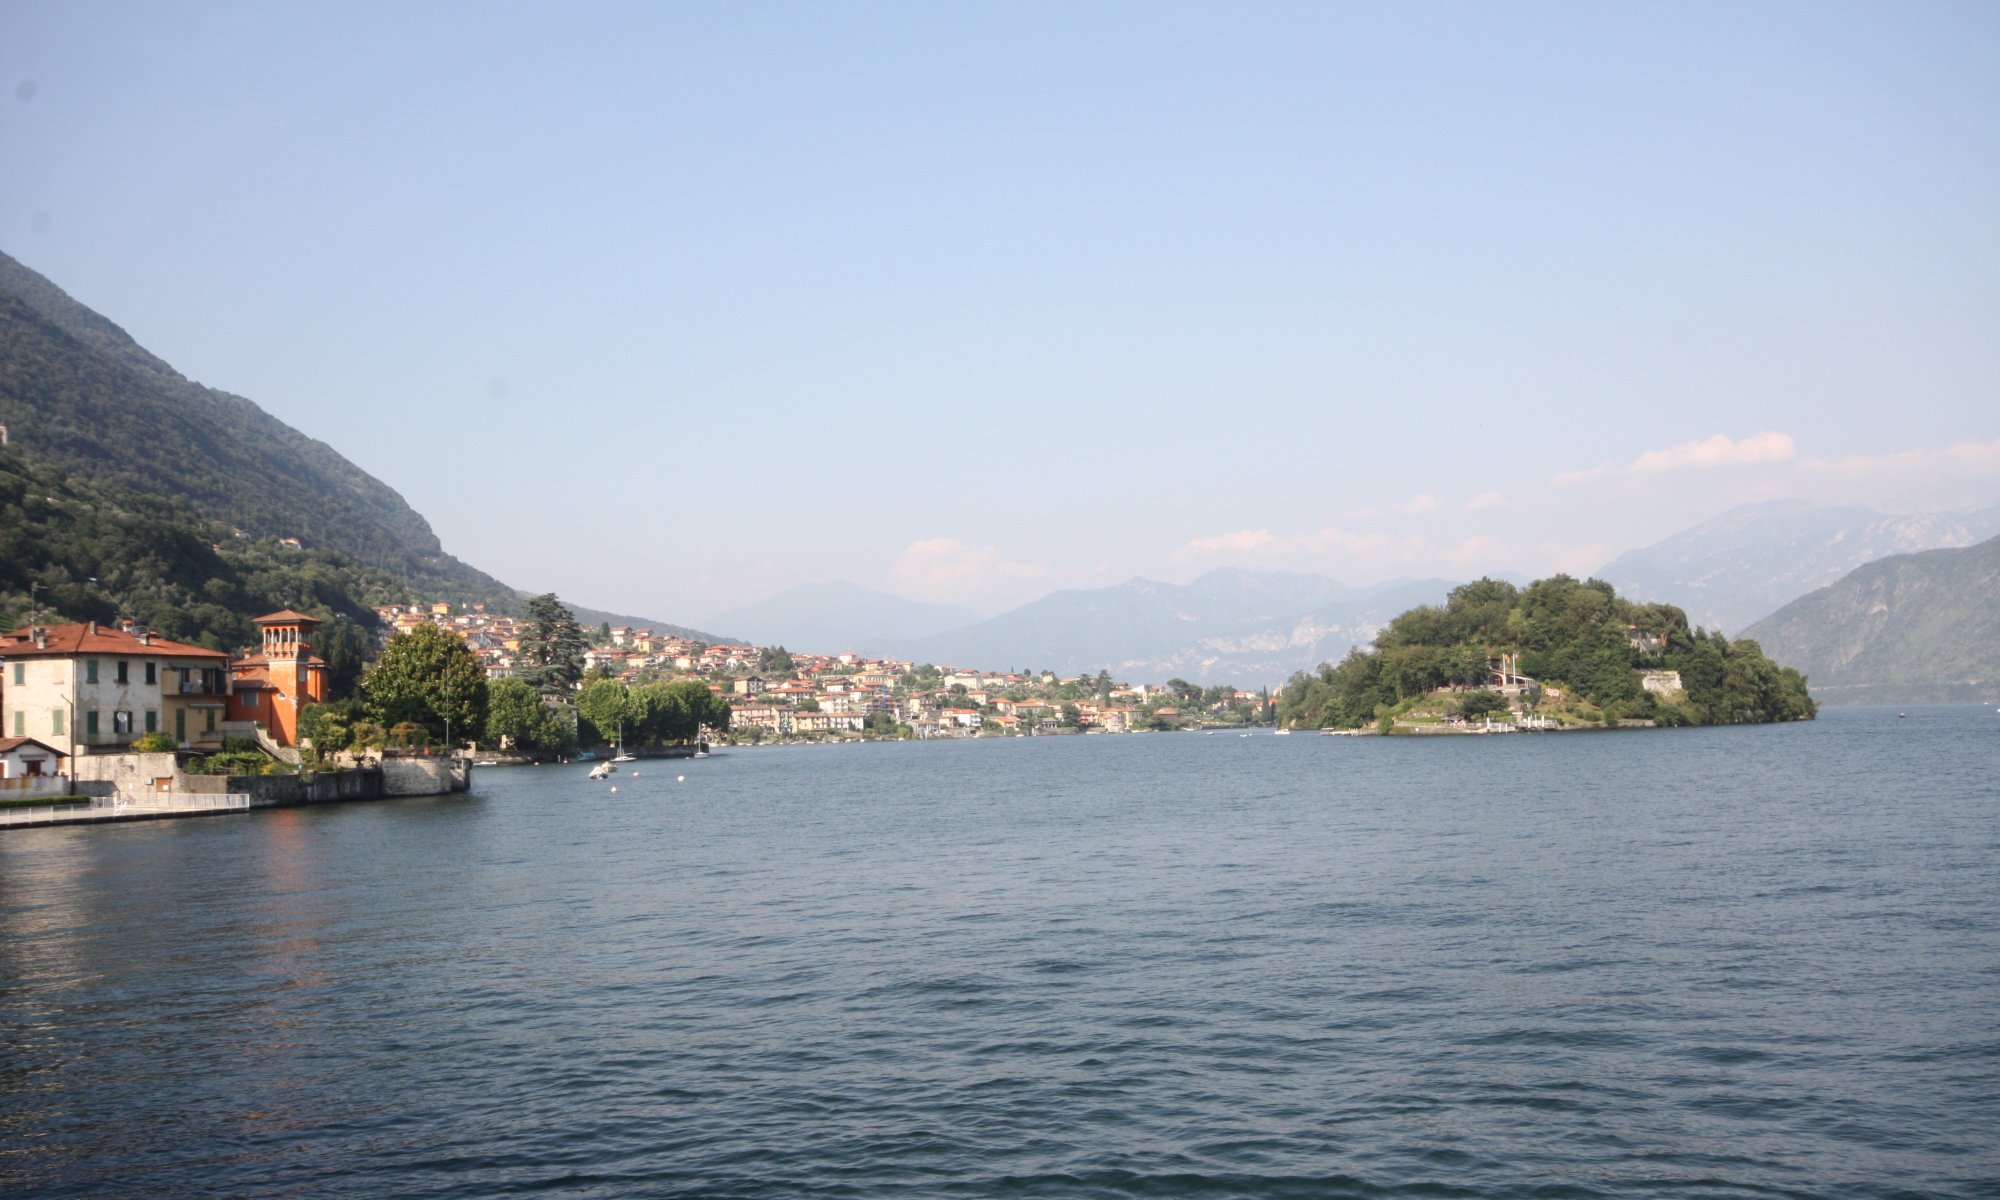 Lago di Como, Italy